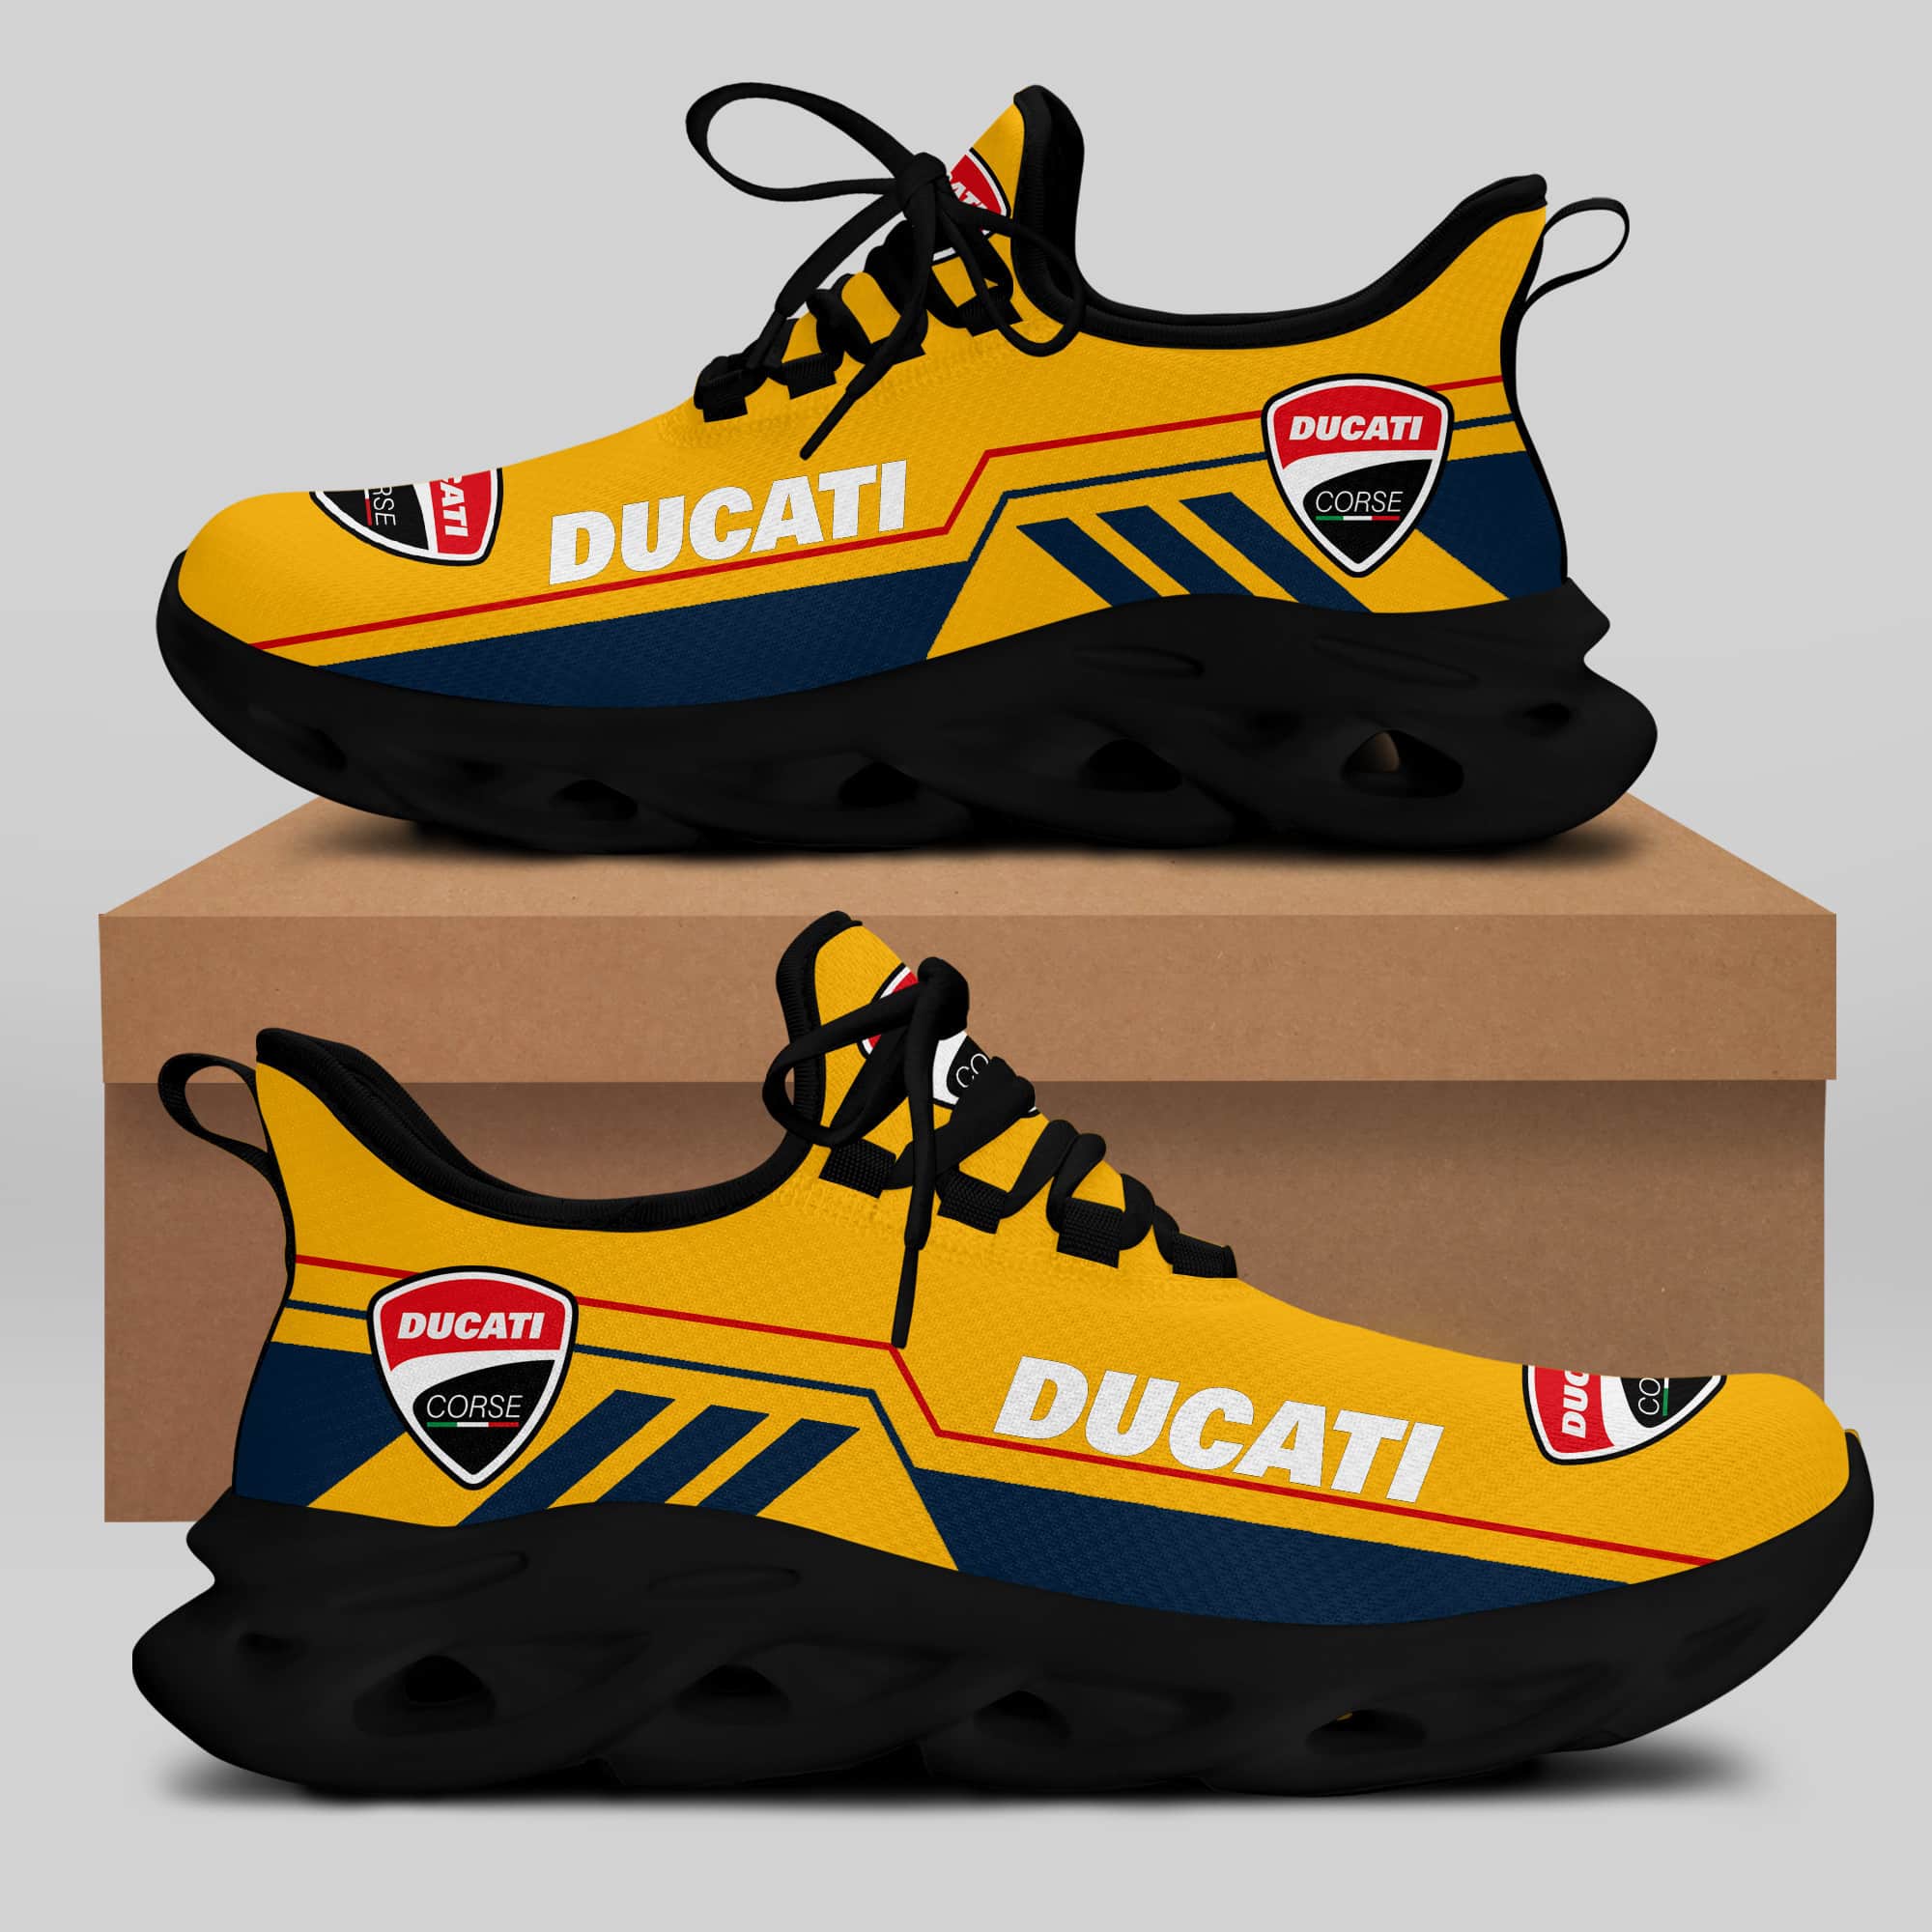 Ducati Racing Running Shoes Max Soul Shoes Sneakers Ver 26 1